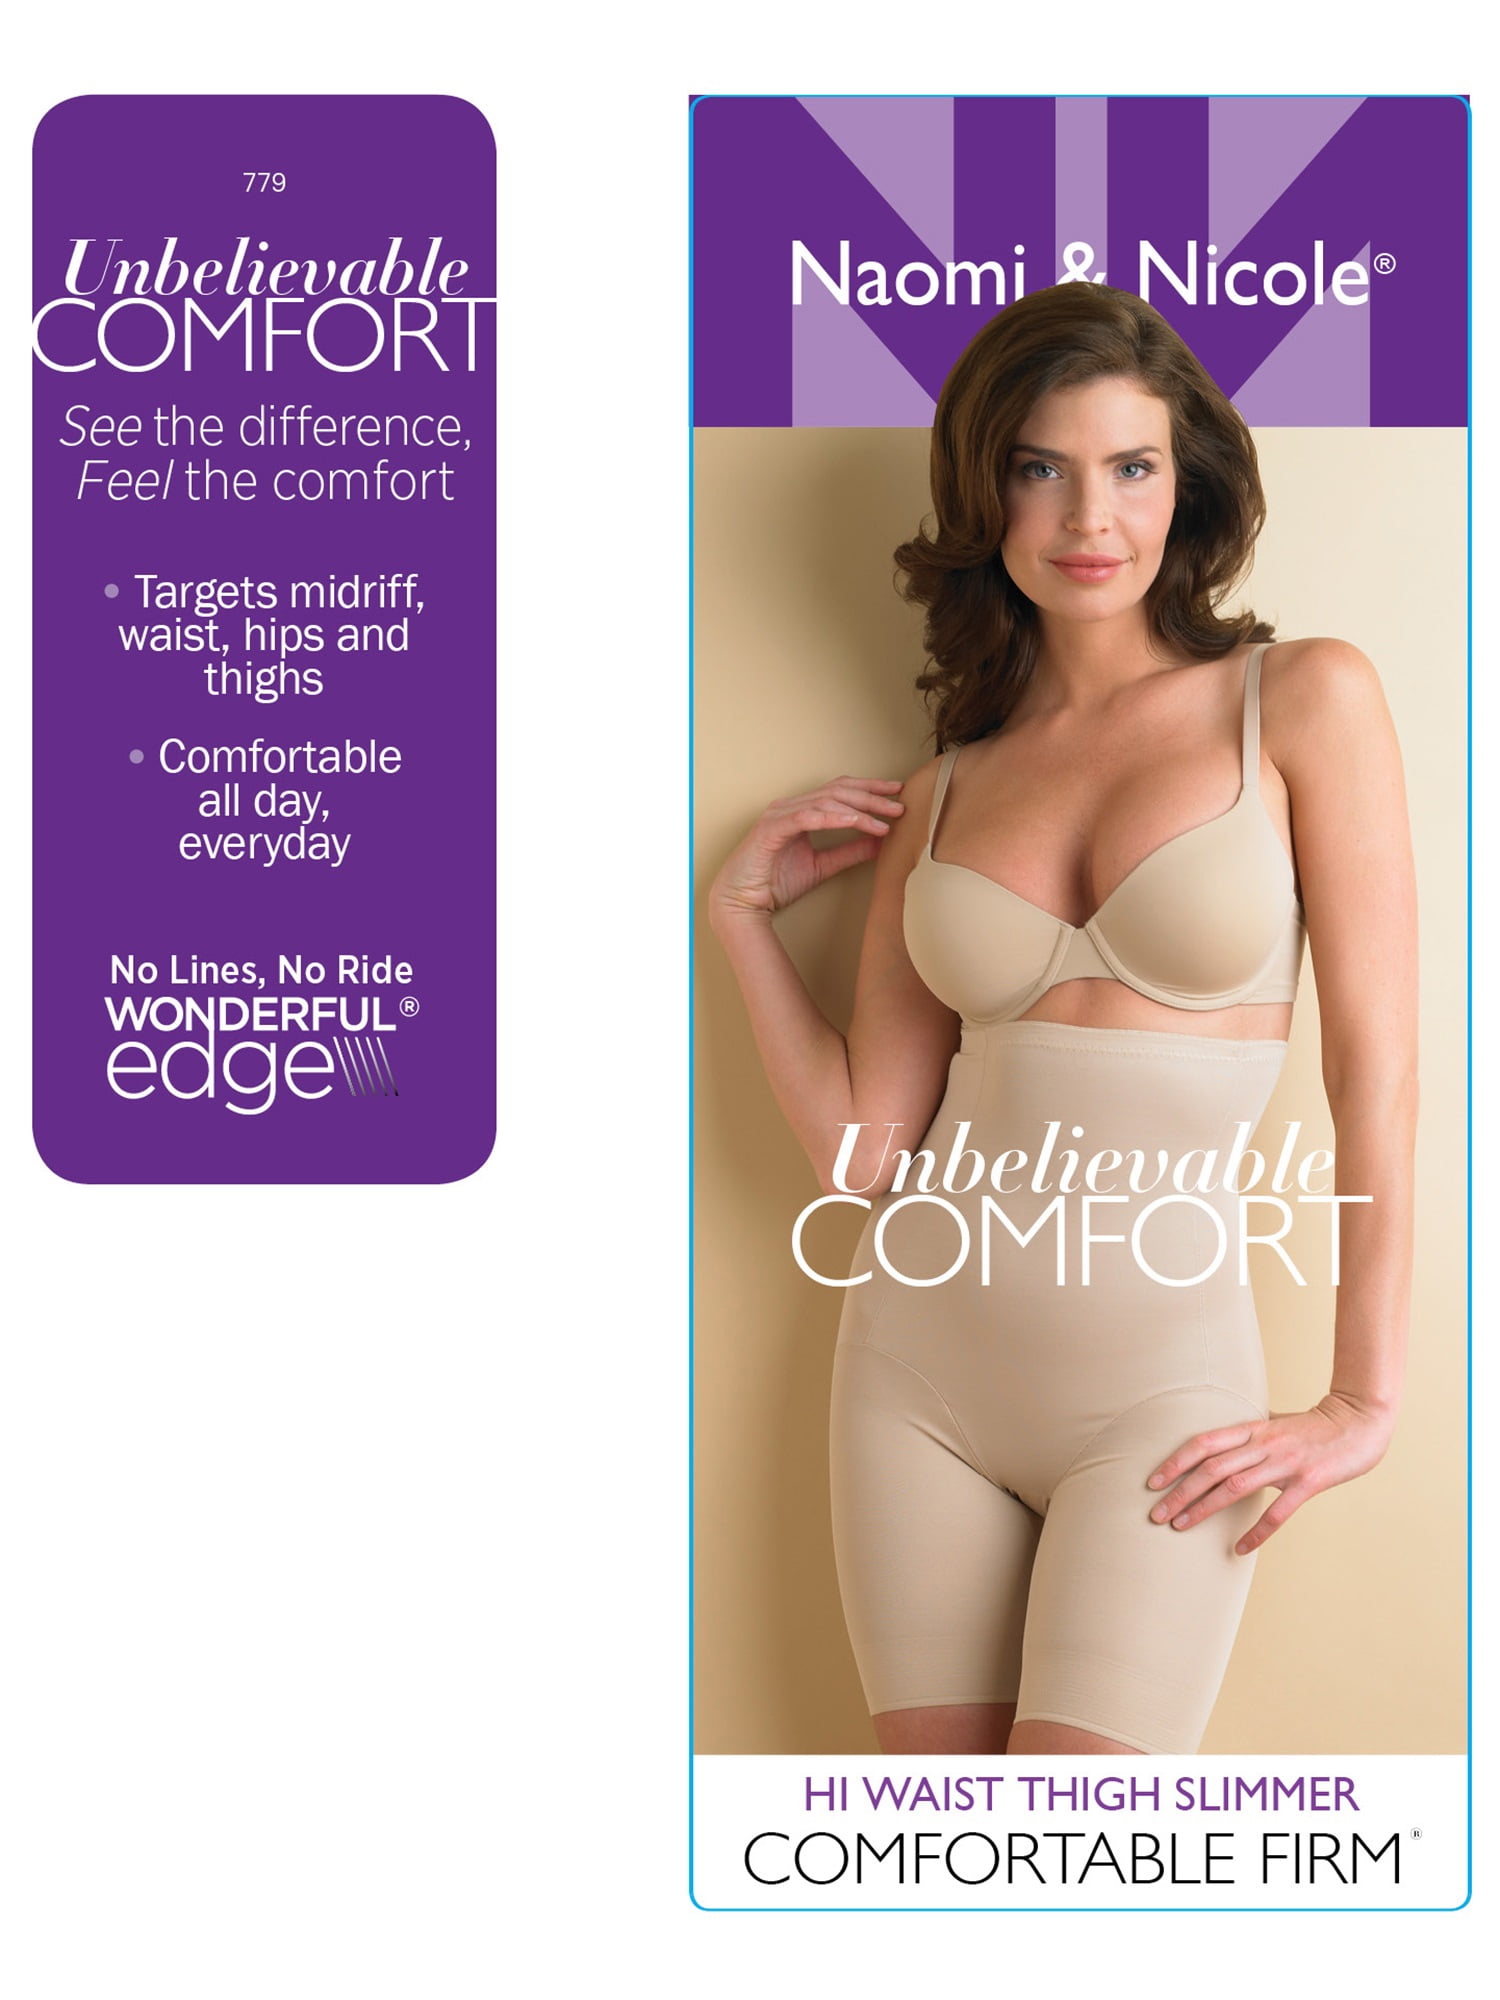 Naomi & Nicole Unbelievable Comfort Hi-Waist Thigh Slimmer 